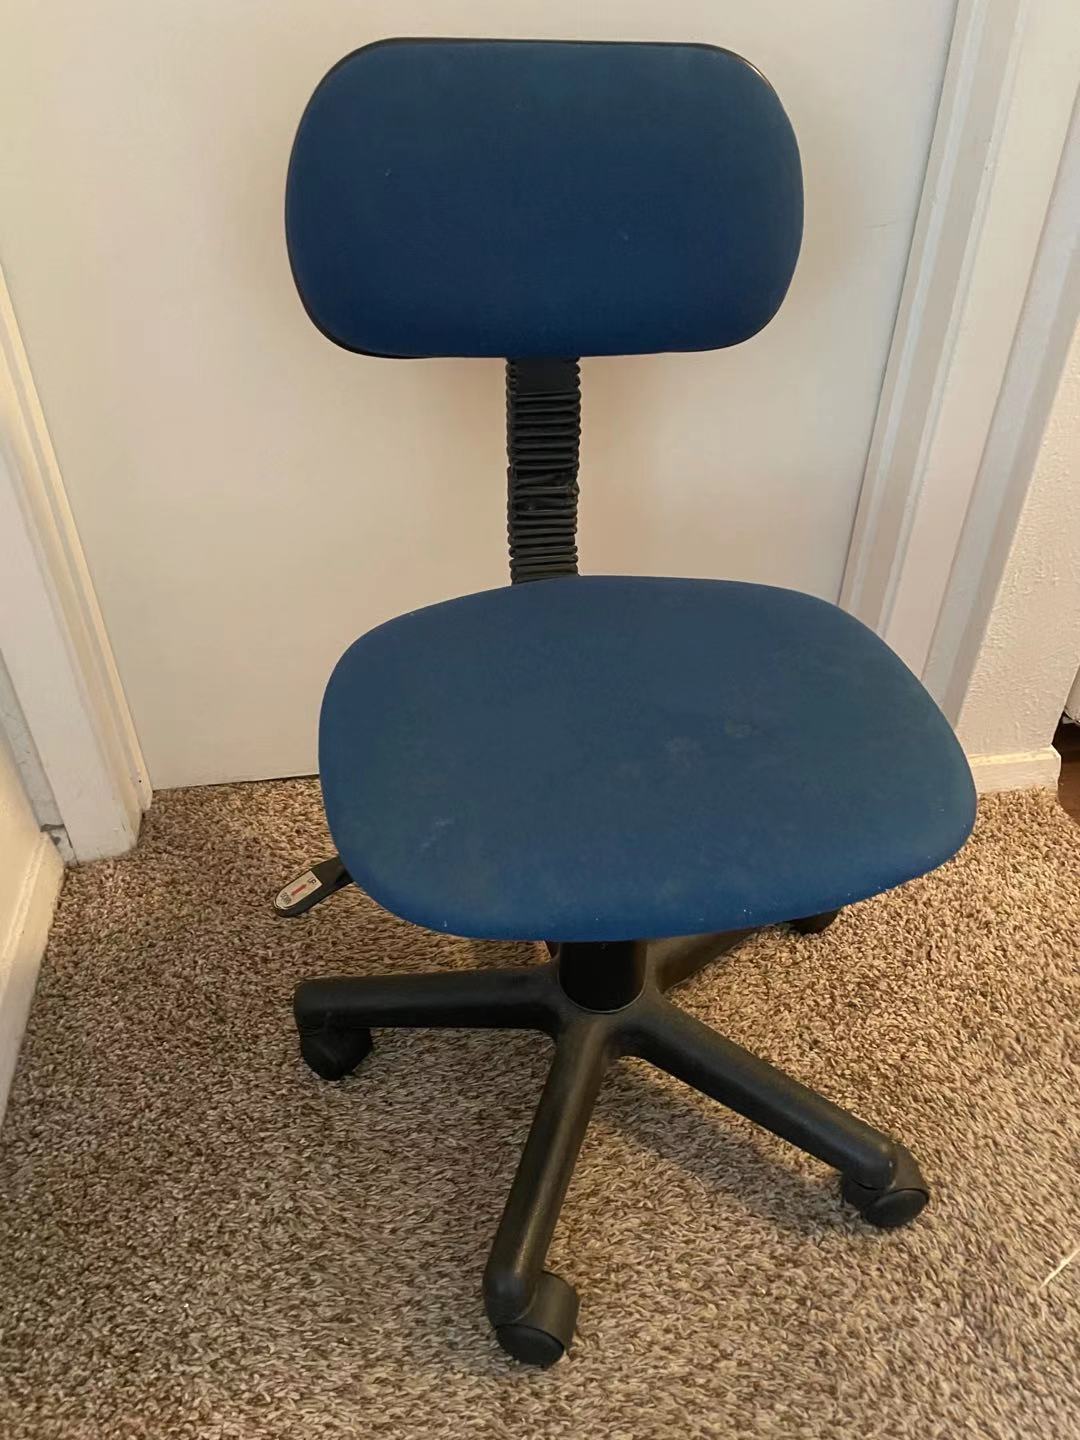 office chair.jpg